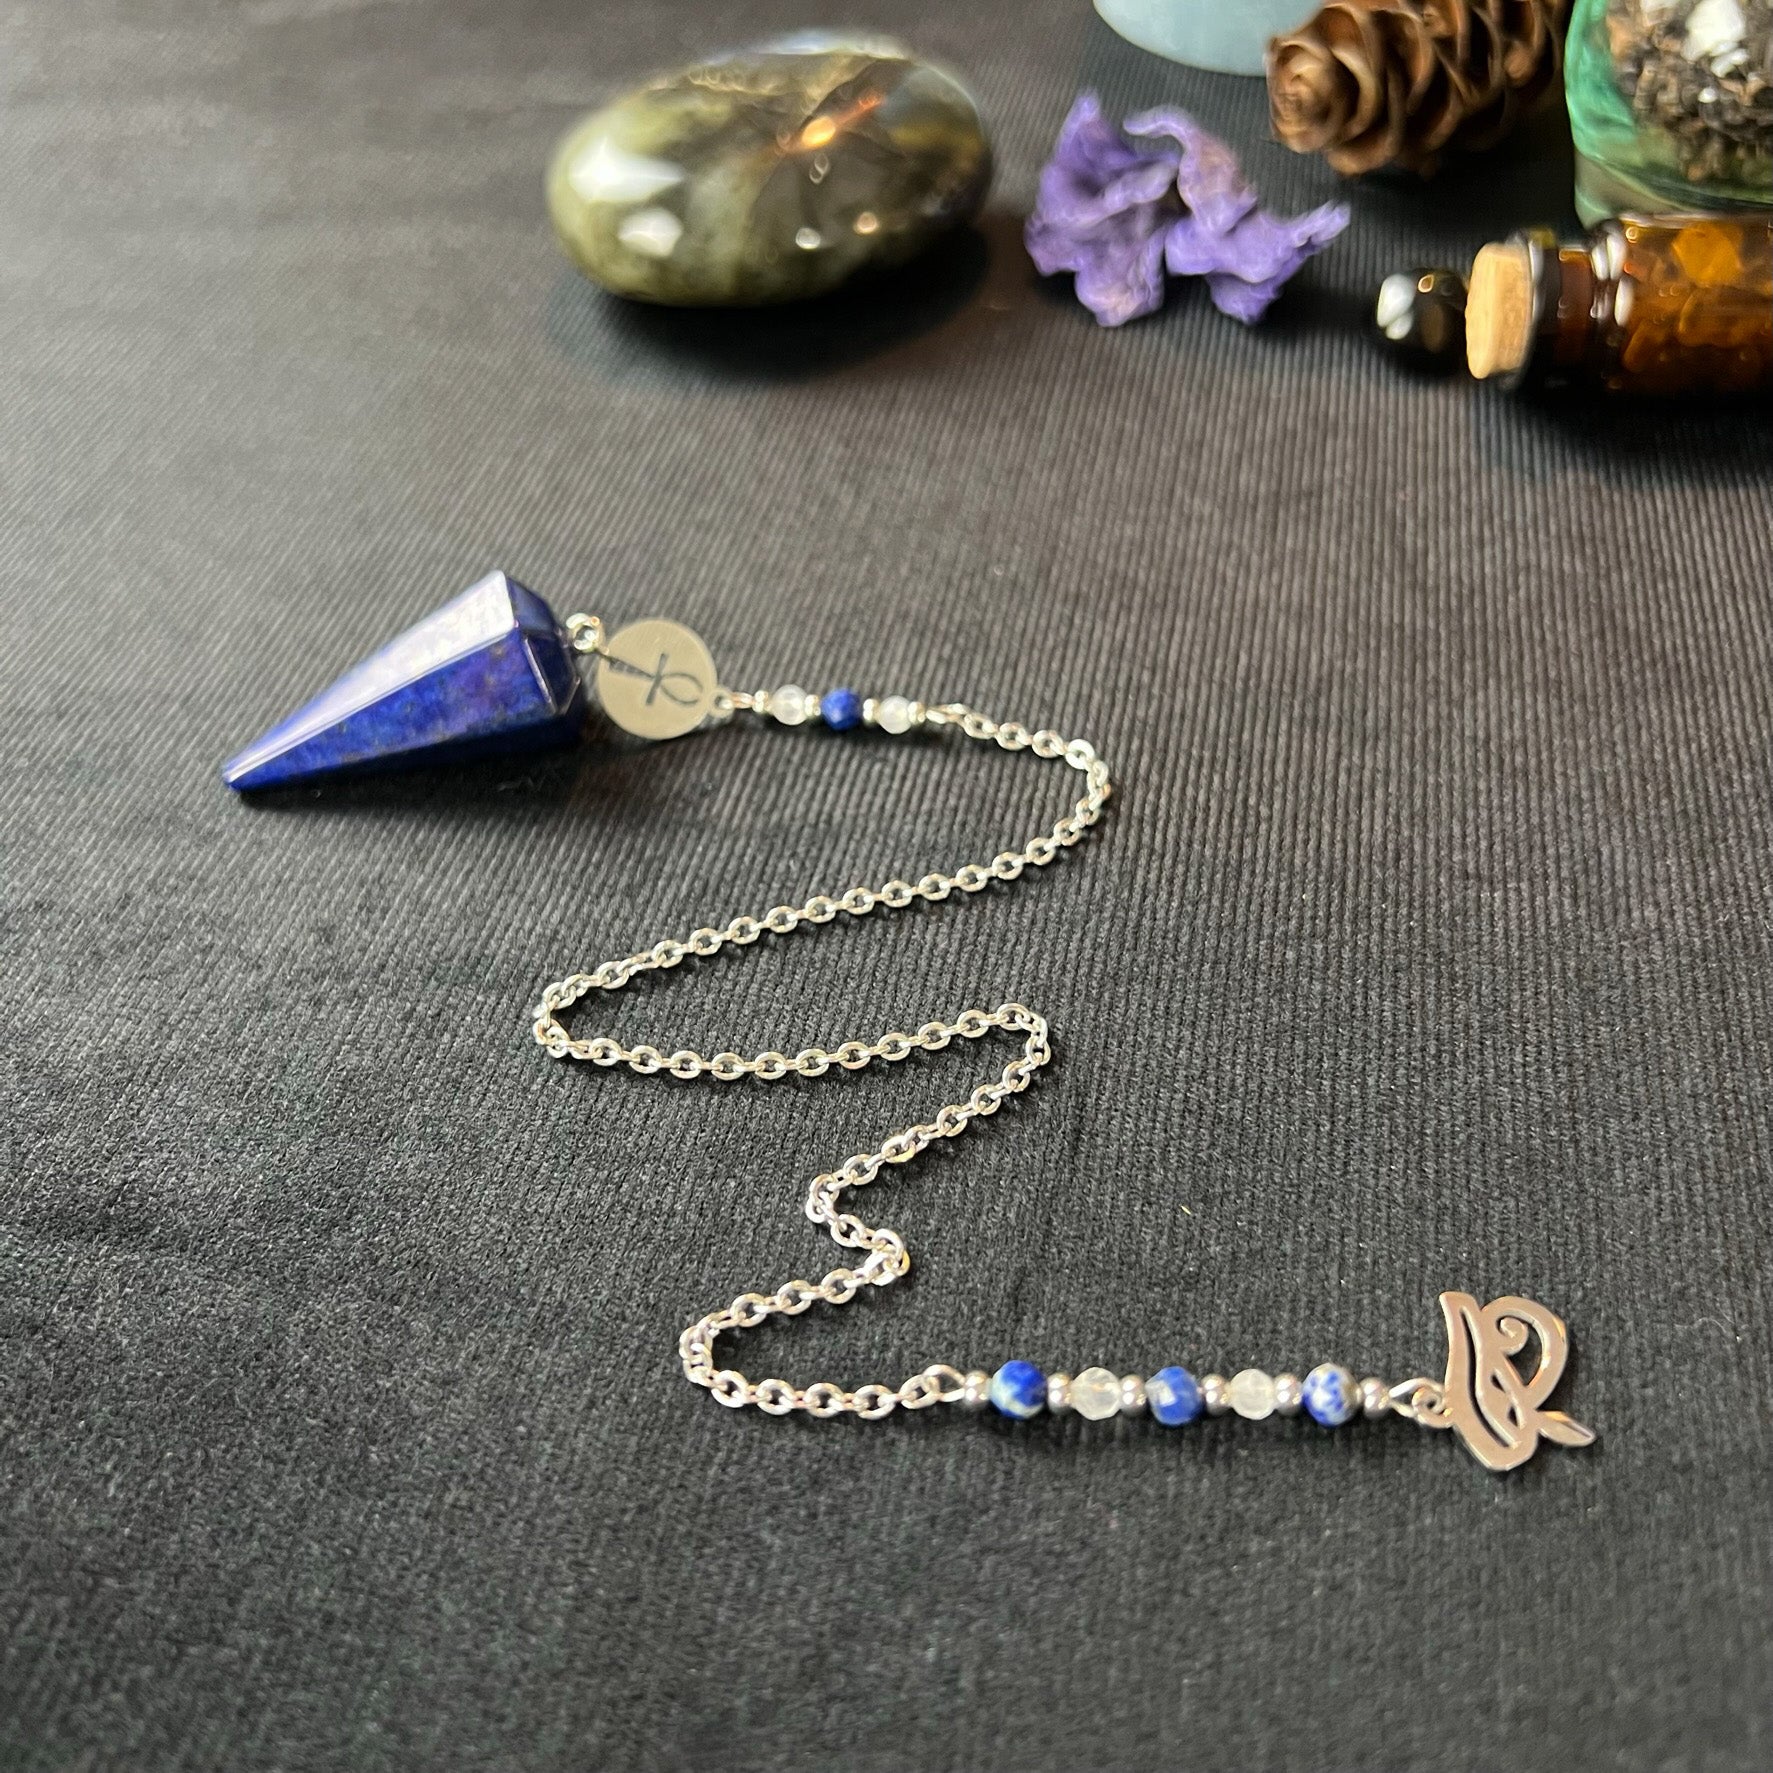 Gemstone pendulum lapis lazuli, moonstone, and stainless steel Eye of Horus Ankh divination tool crystal pendulum